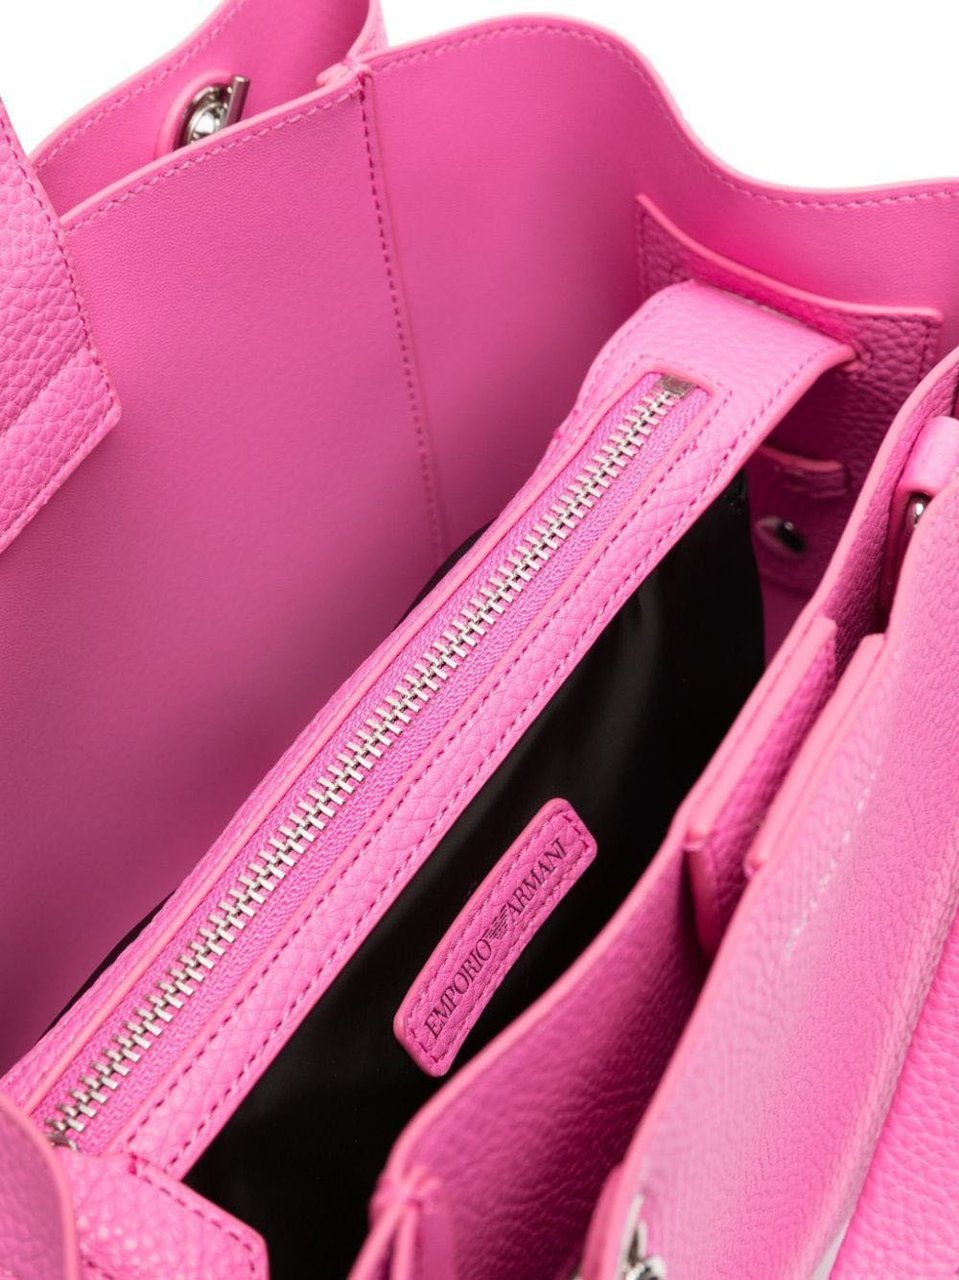 Emporio Armani Charm Pink Handbag Pink Roze